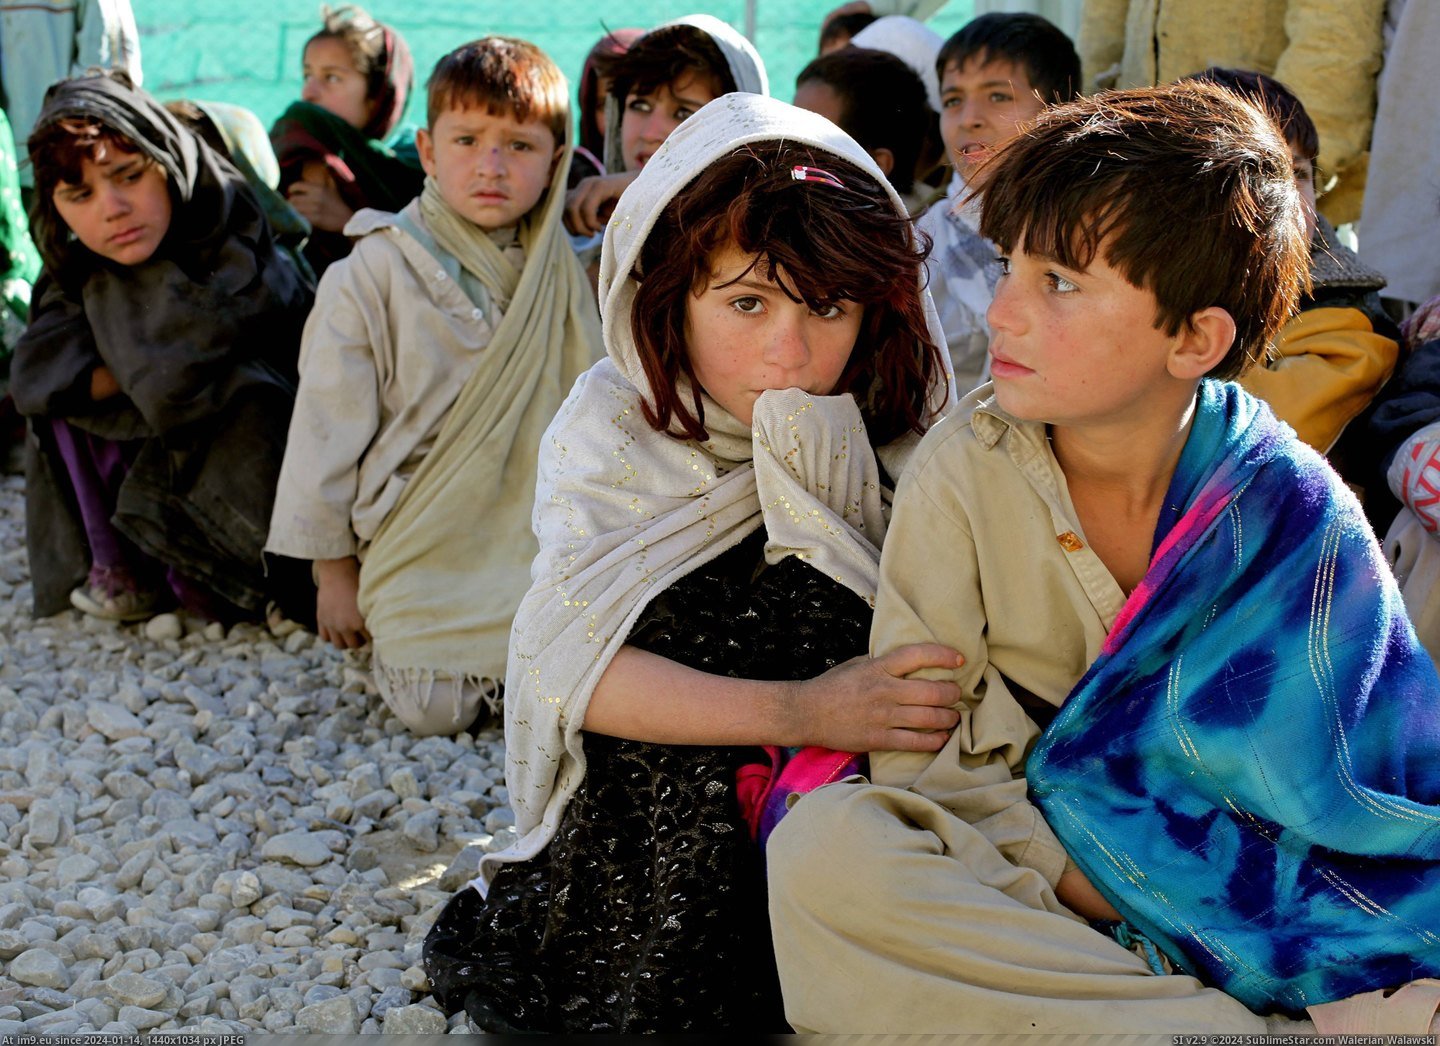 #Children #Khost #Pashtun #Afghanistan [Pics] Pashtun children from Khost, Afghanistan Pic. (Obraz z album My r/PICS favs))